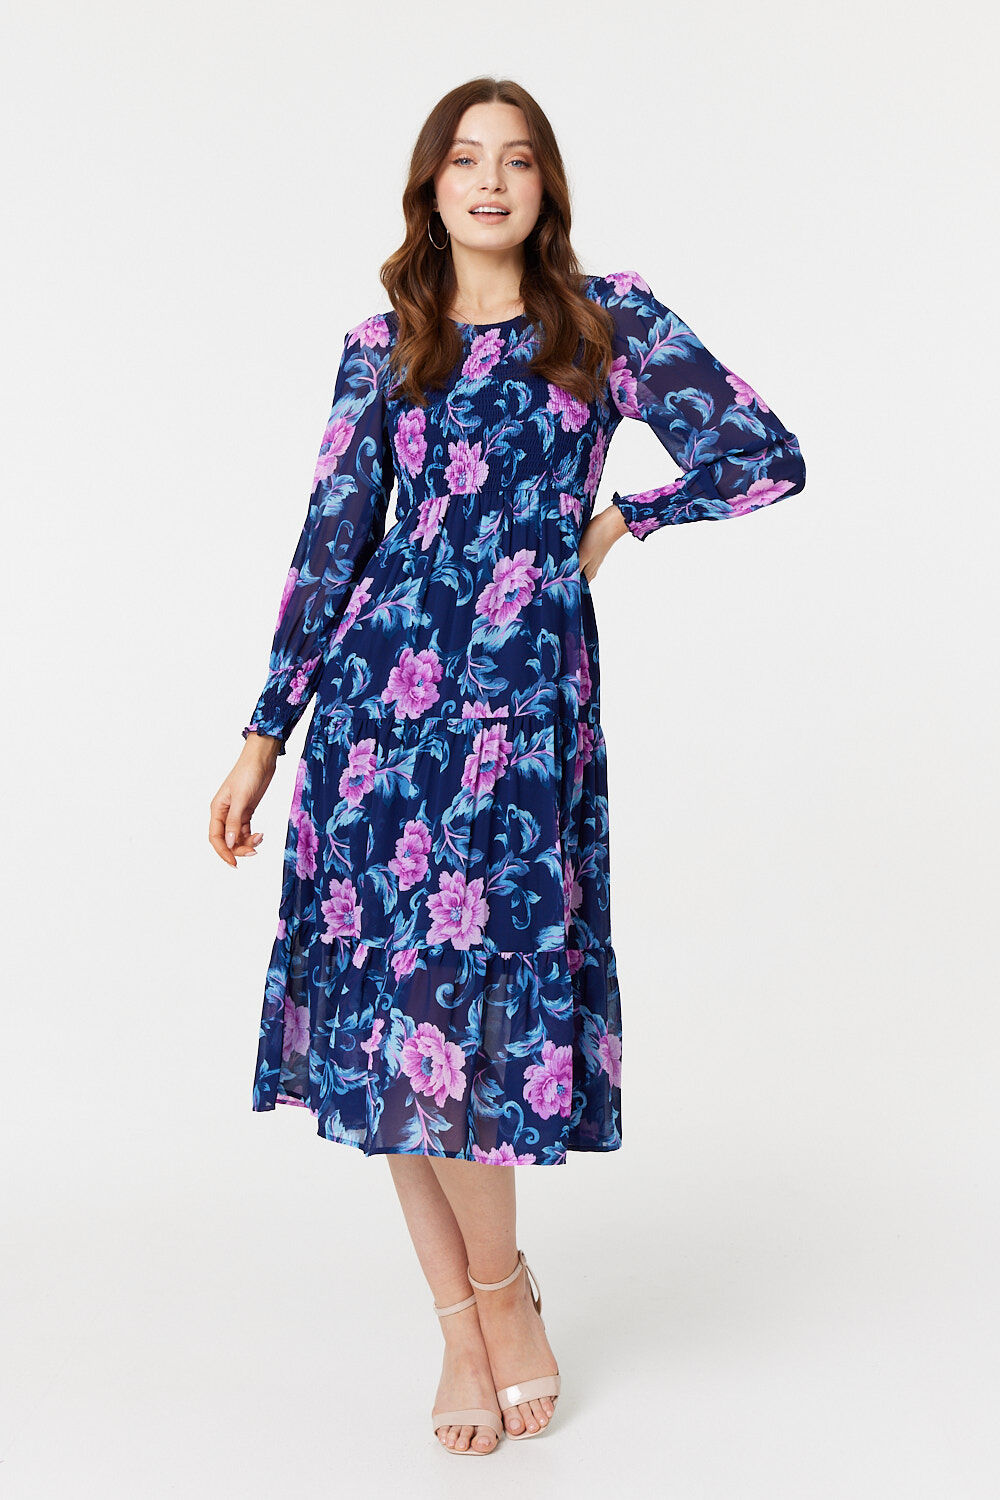 Izabel London Navy - Floral Semi-Sheer Tiered Midi Dress, Size: 18